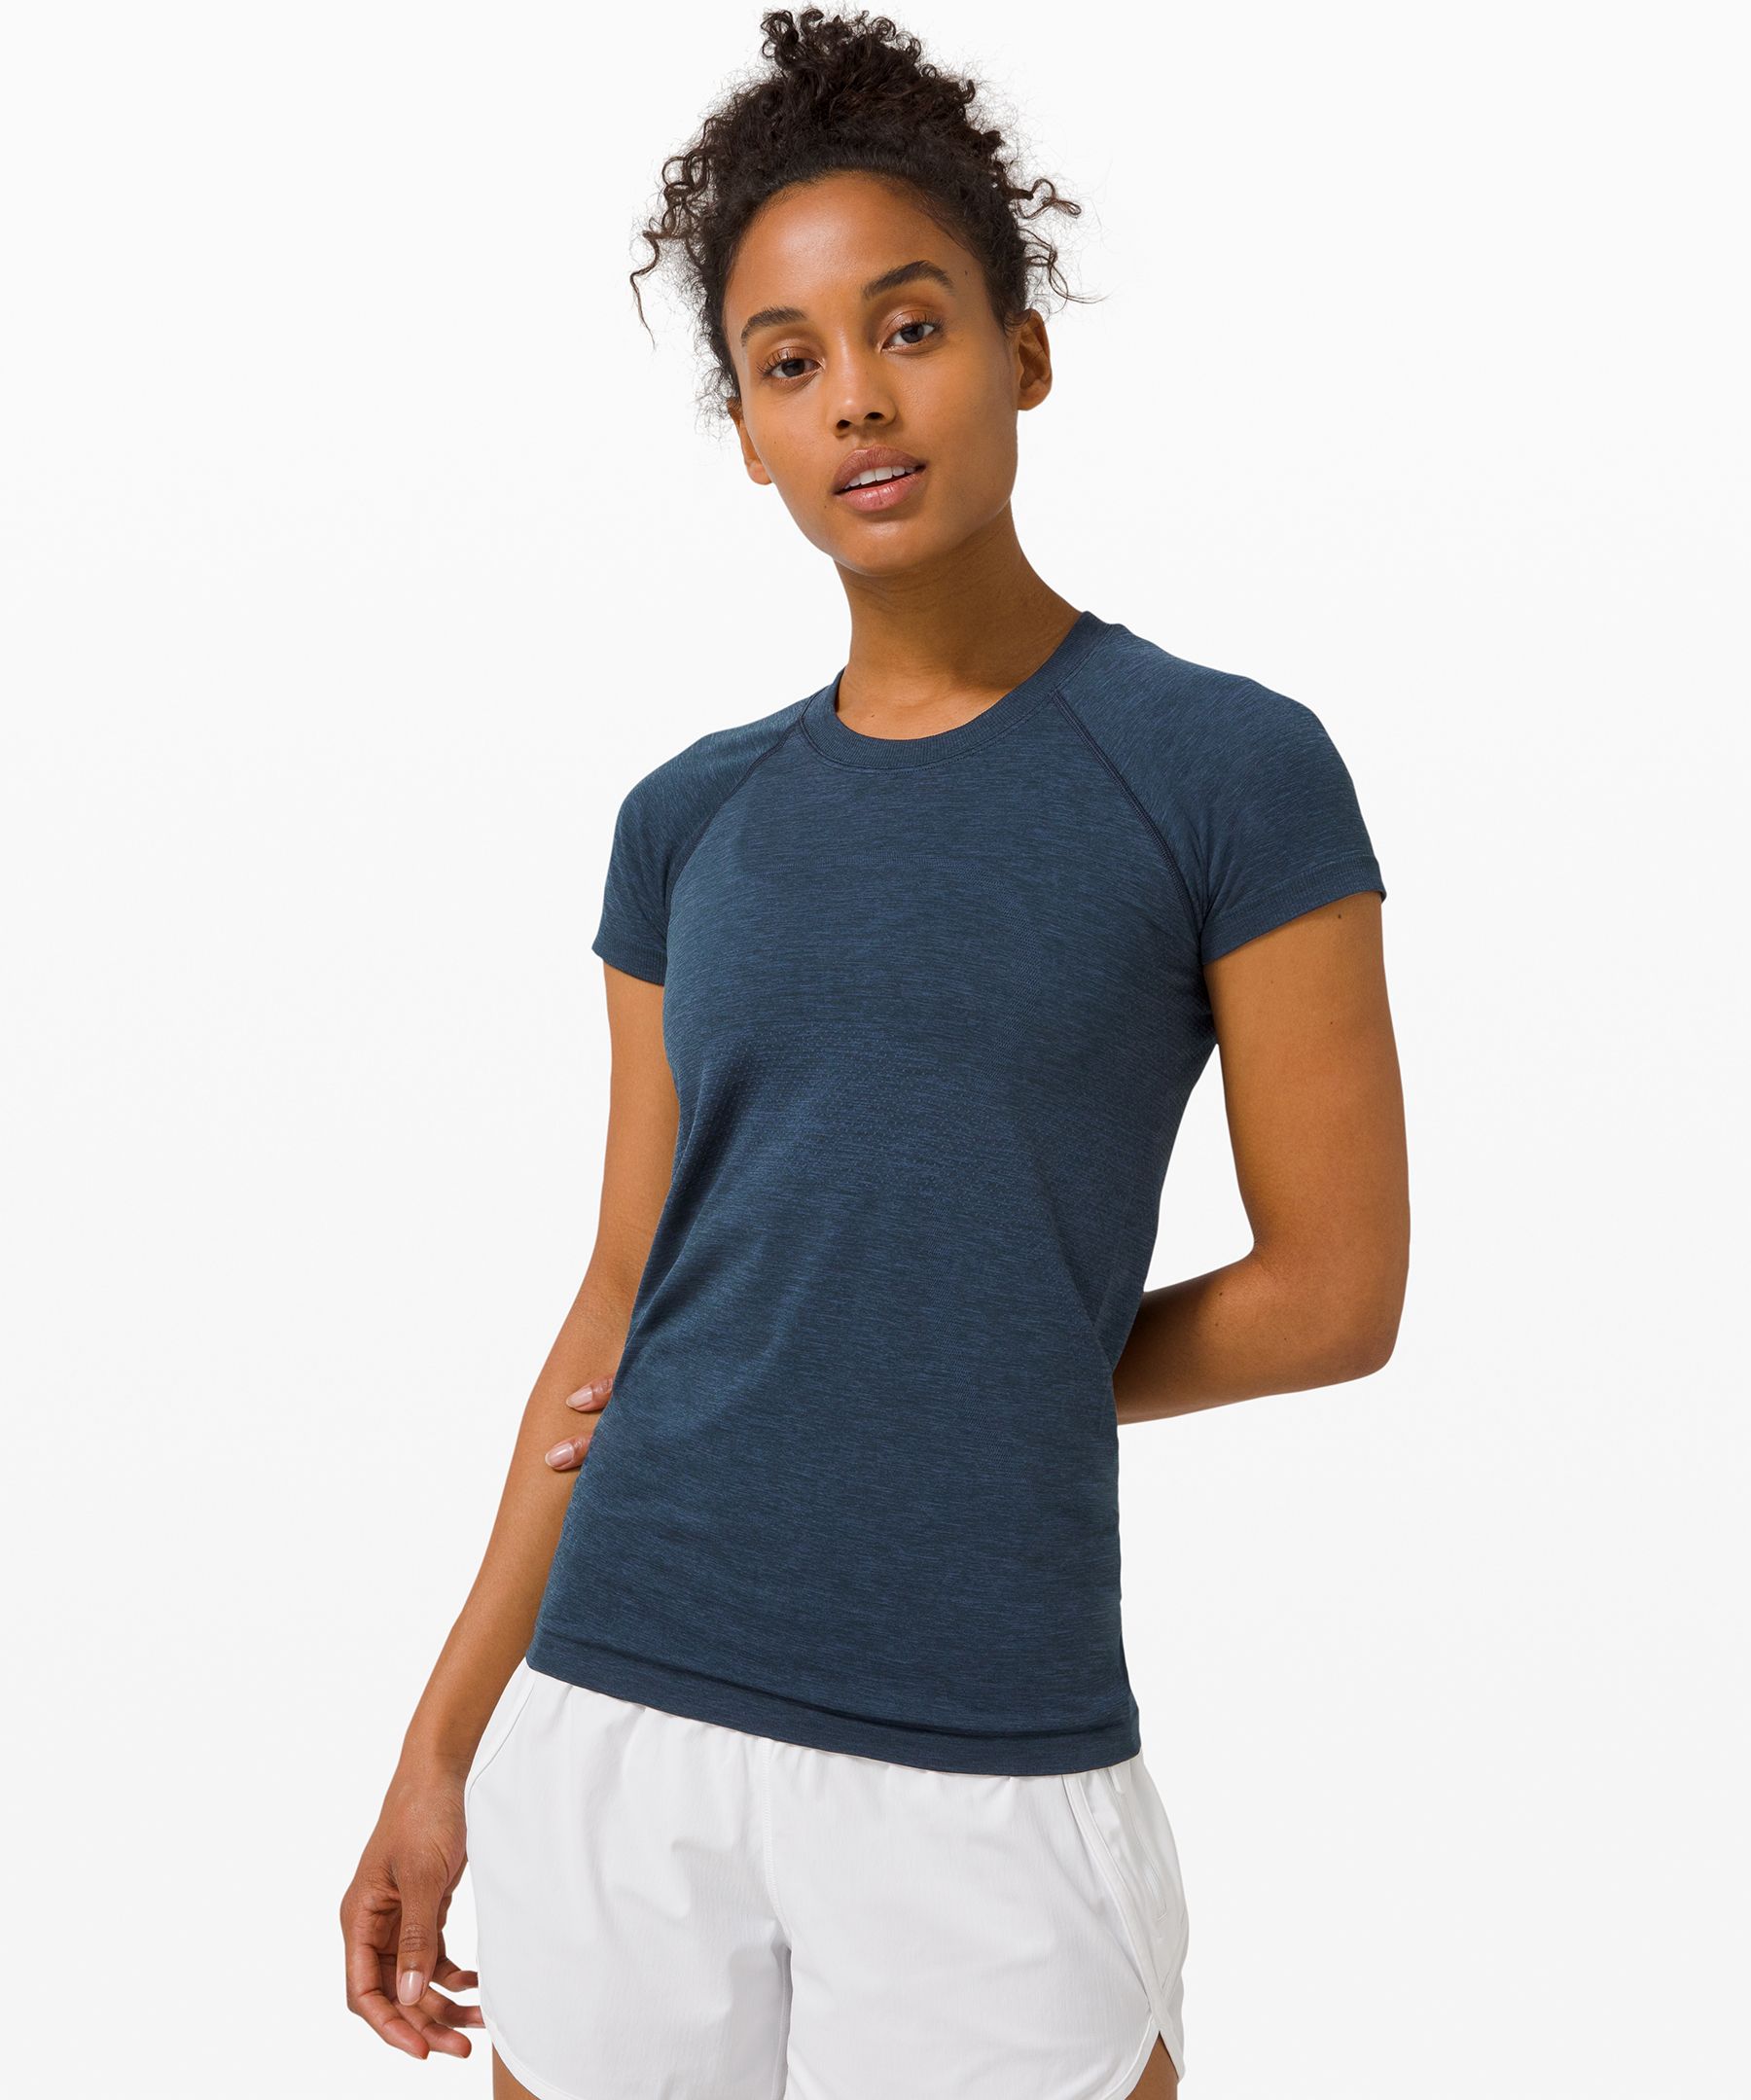 Lululemon Swiftly Tech Short Sleeve Shirt 2.0 In Ink Blue/true Navy